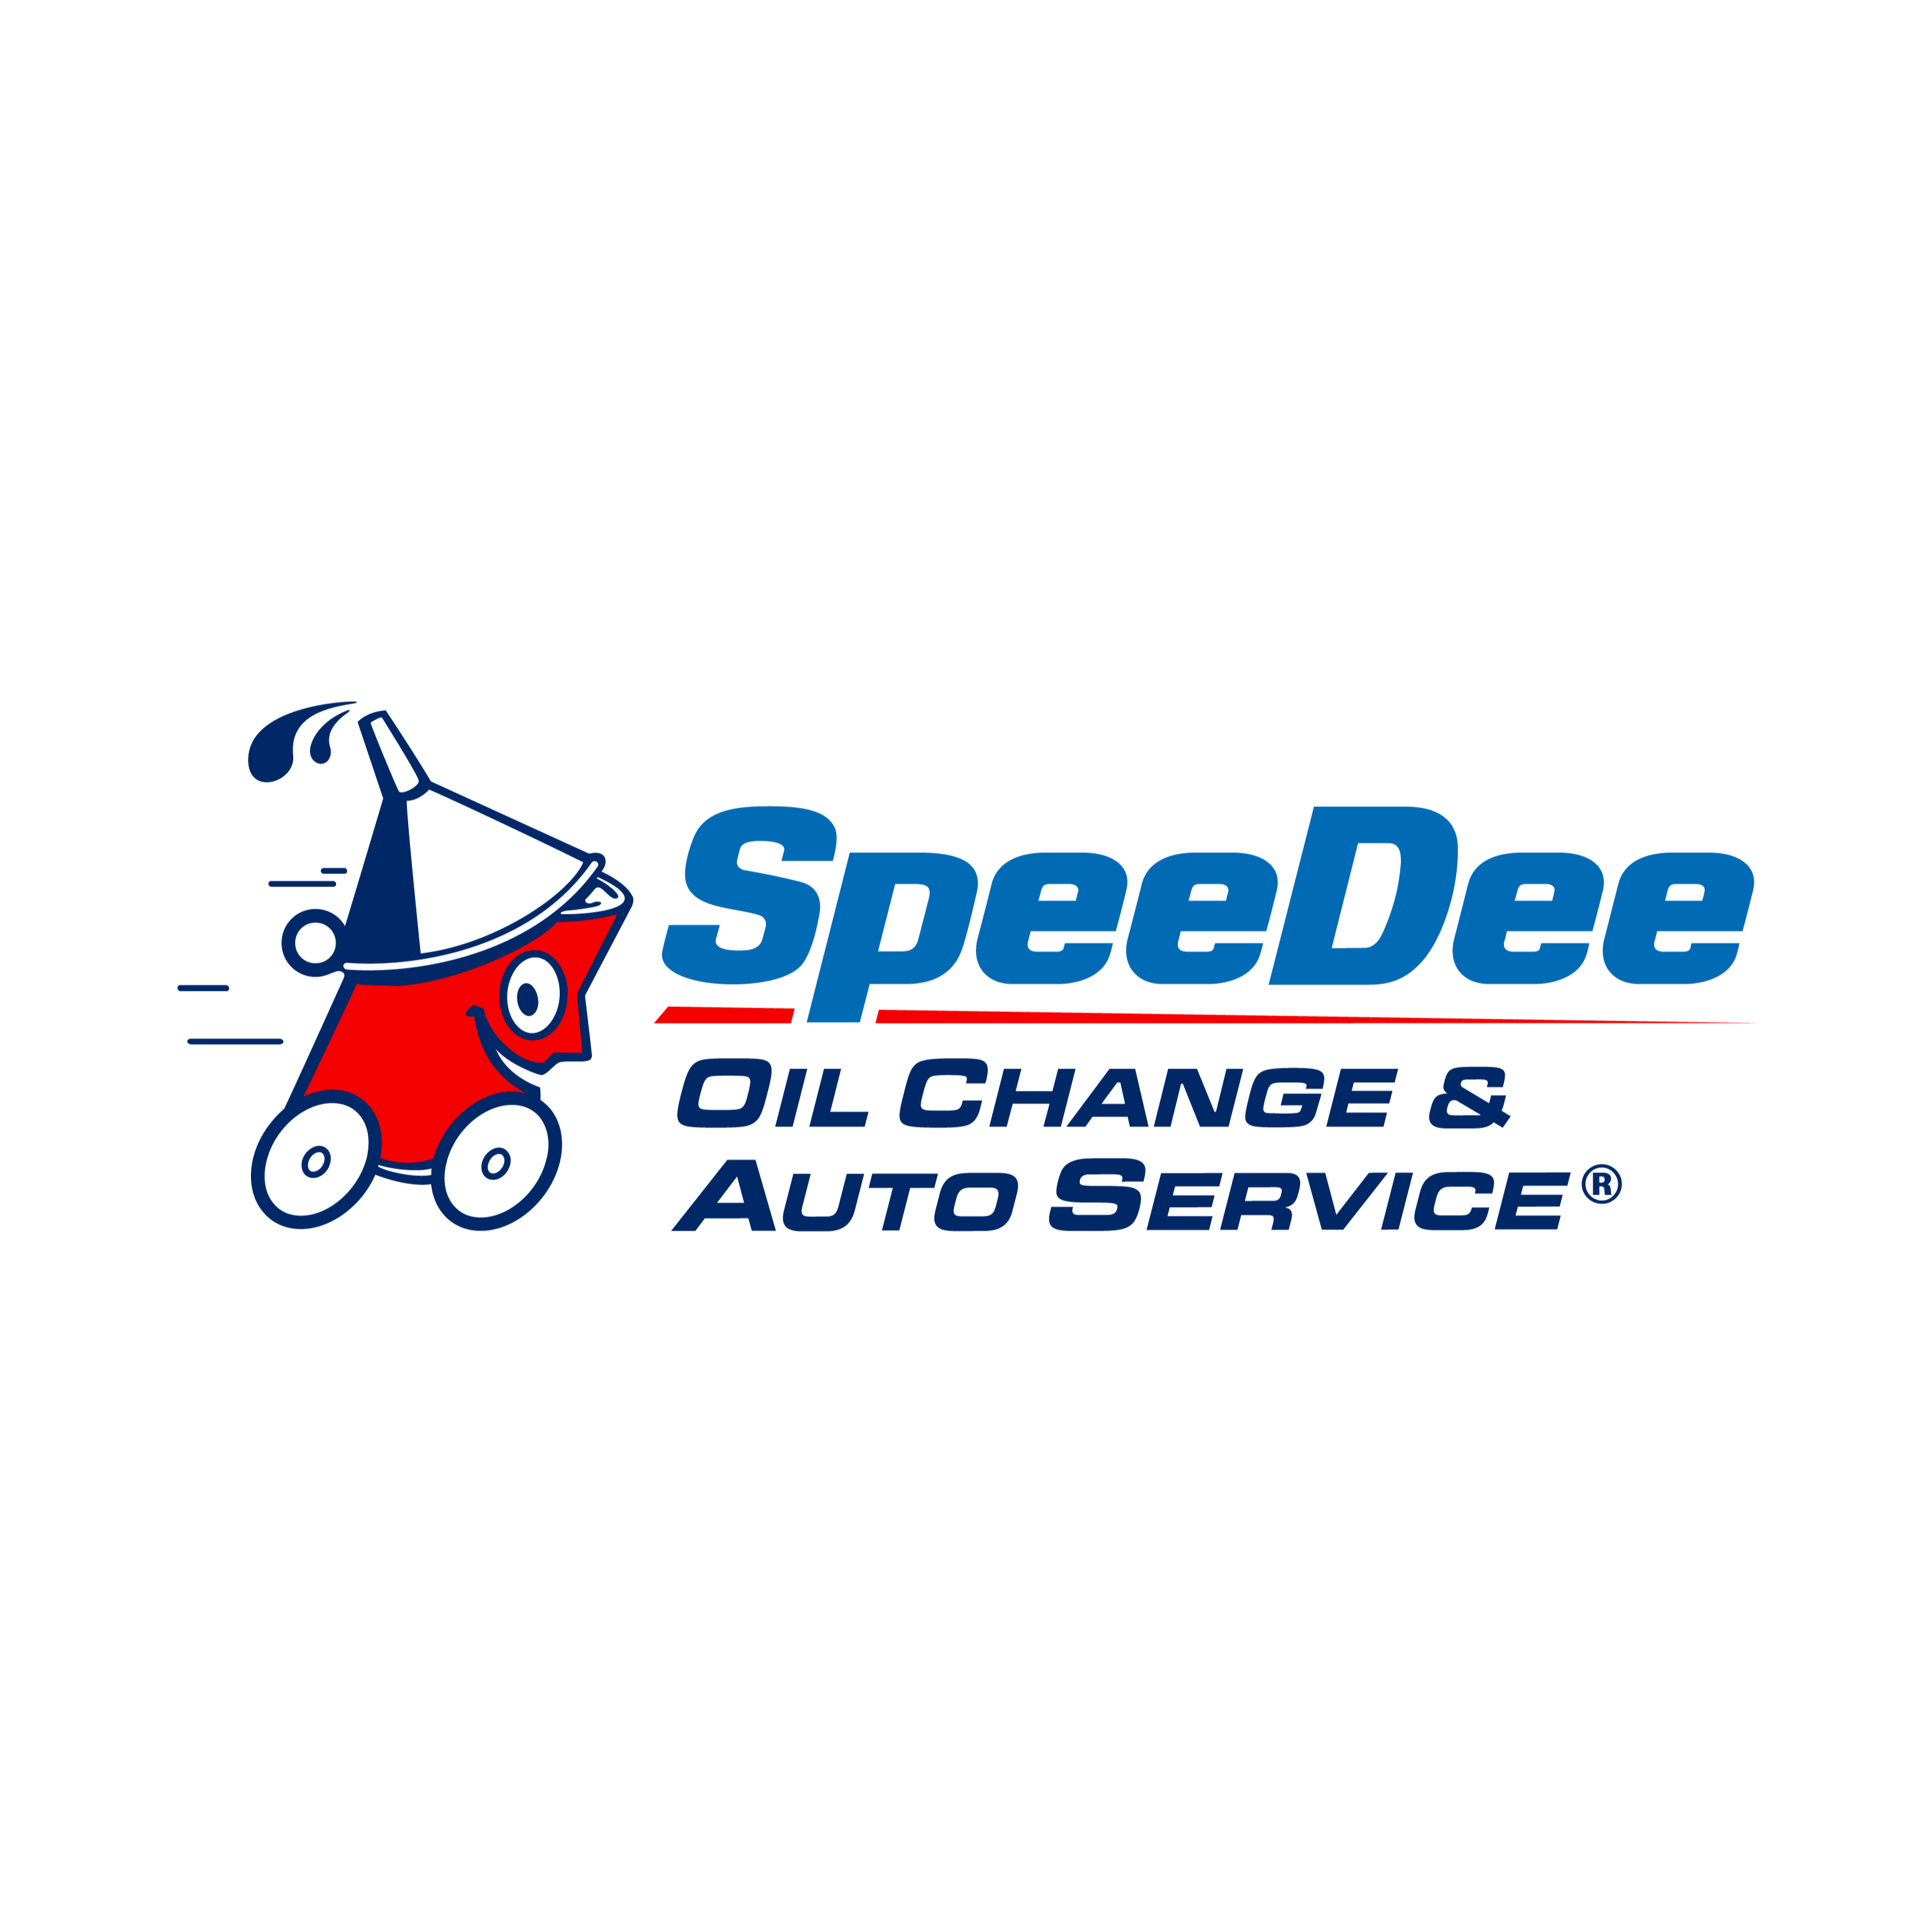 SpeeDee Oil Change & Auto Service - Turlock, CA 95380 - (209)664-1996 | ShowMeLocal.com